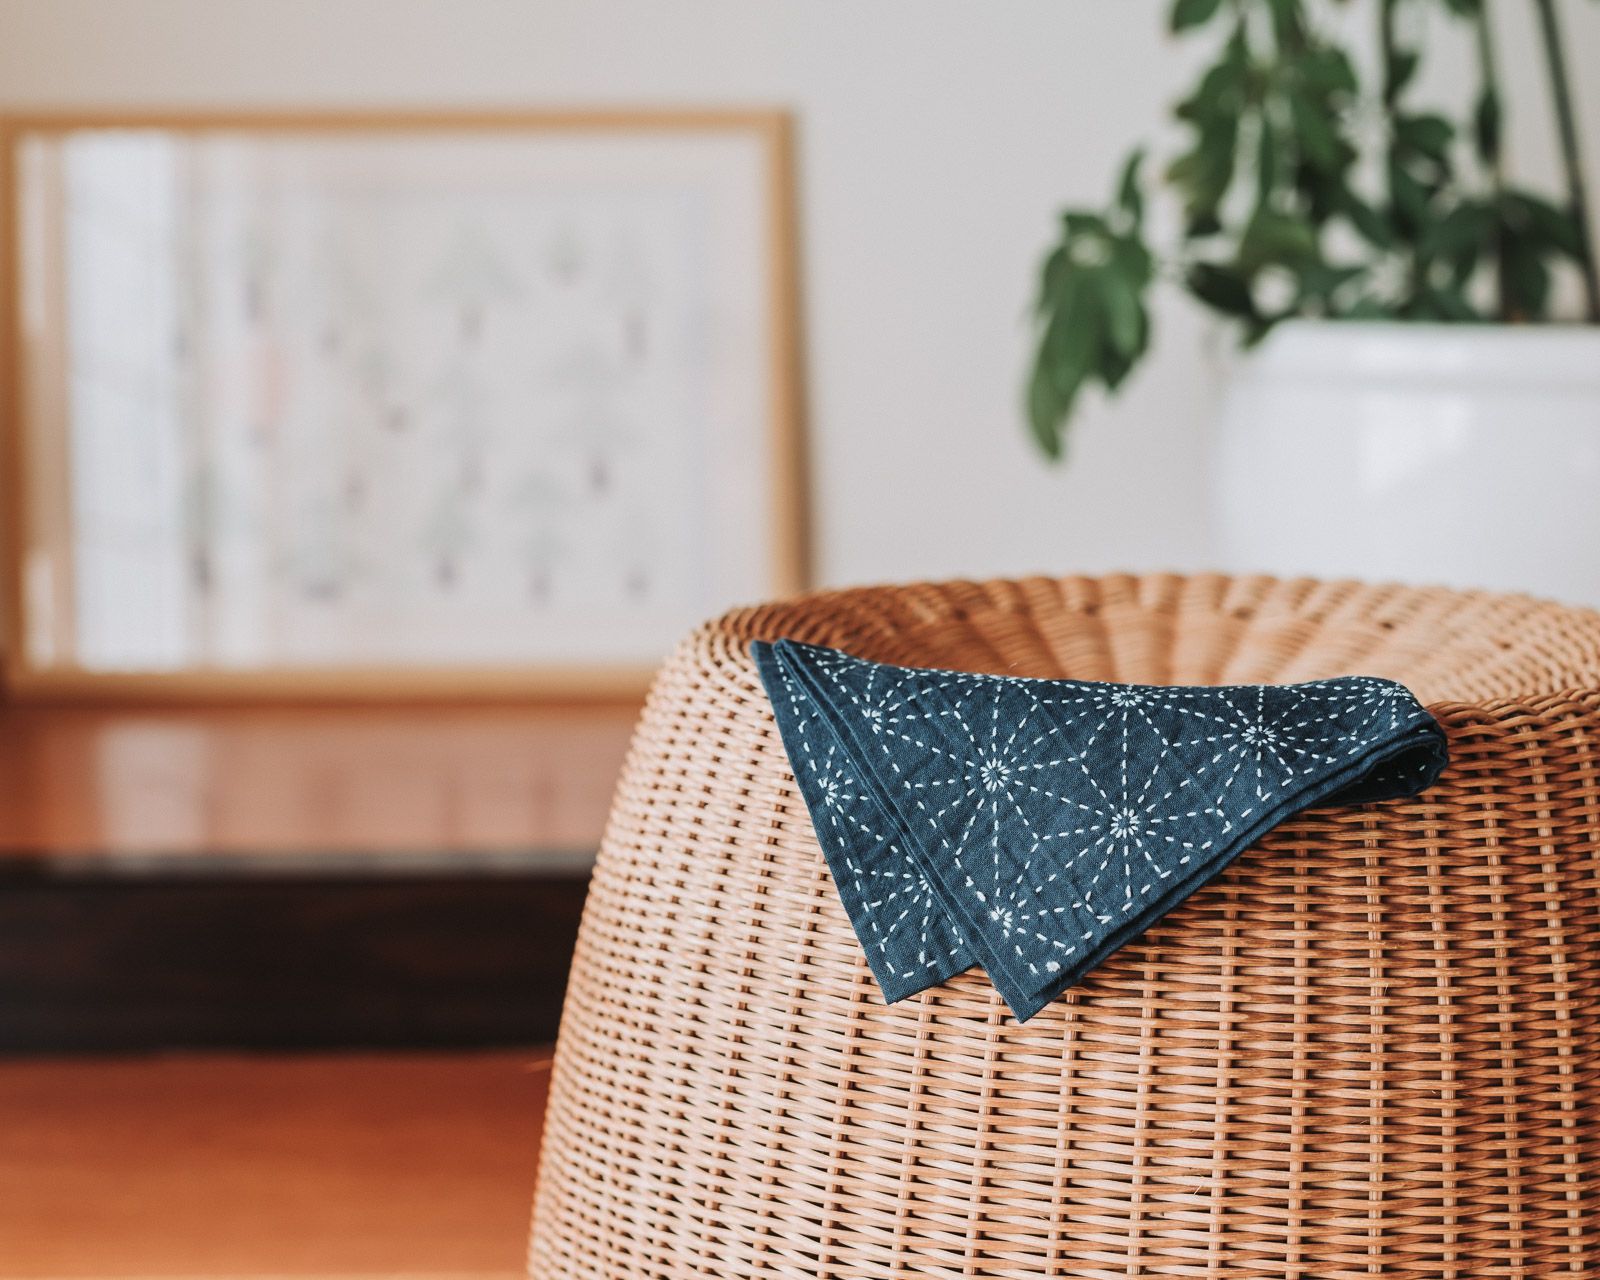 Asanoha pattern on a kitchen cloth draped across a rattan stool.